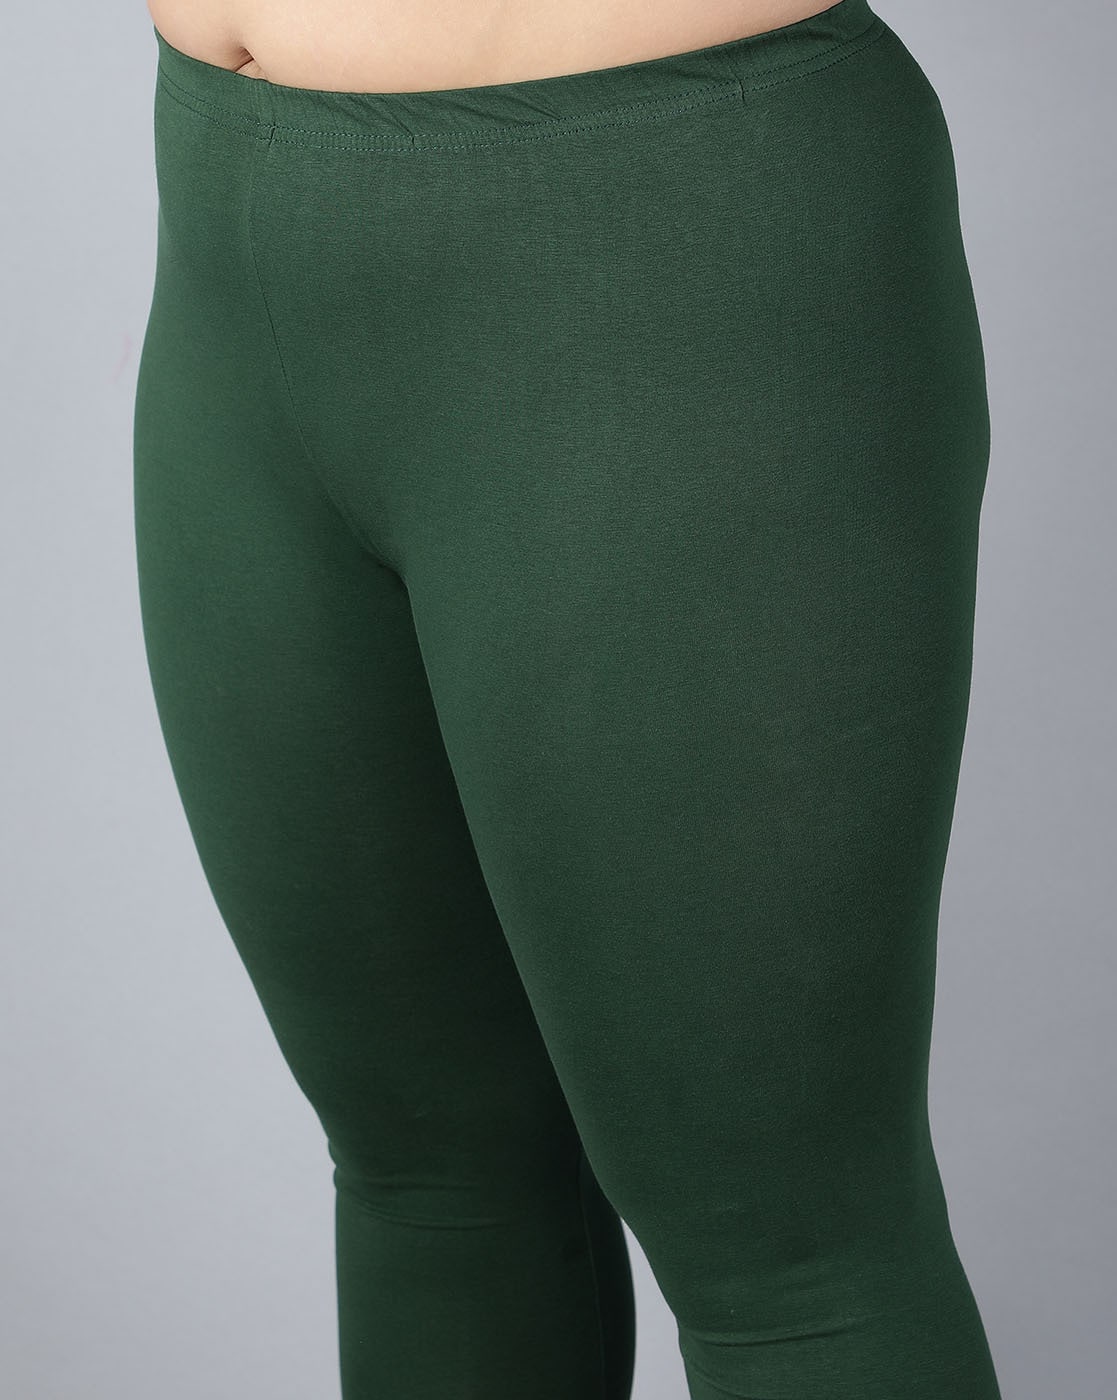 Women`s Plus Size Long Leggings Cotton Lace Edge Full Length Legging | eBay